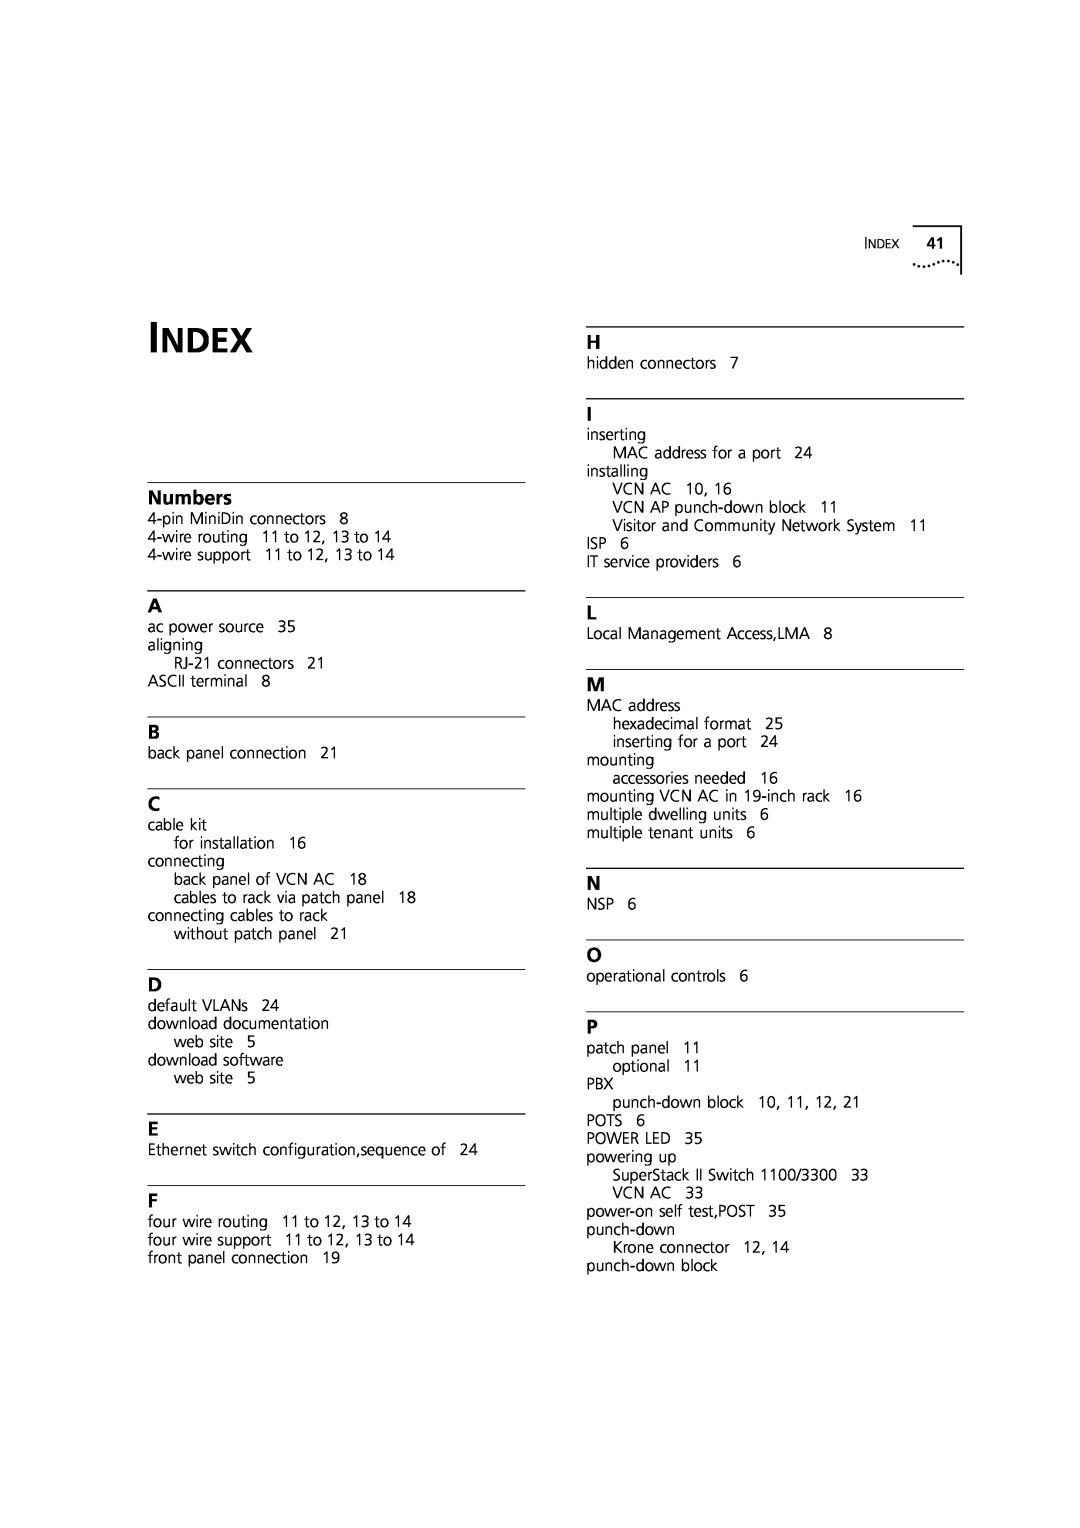 3Com DIA3CV1100-02 manual Index, Numbers 